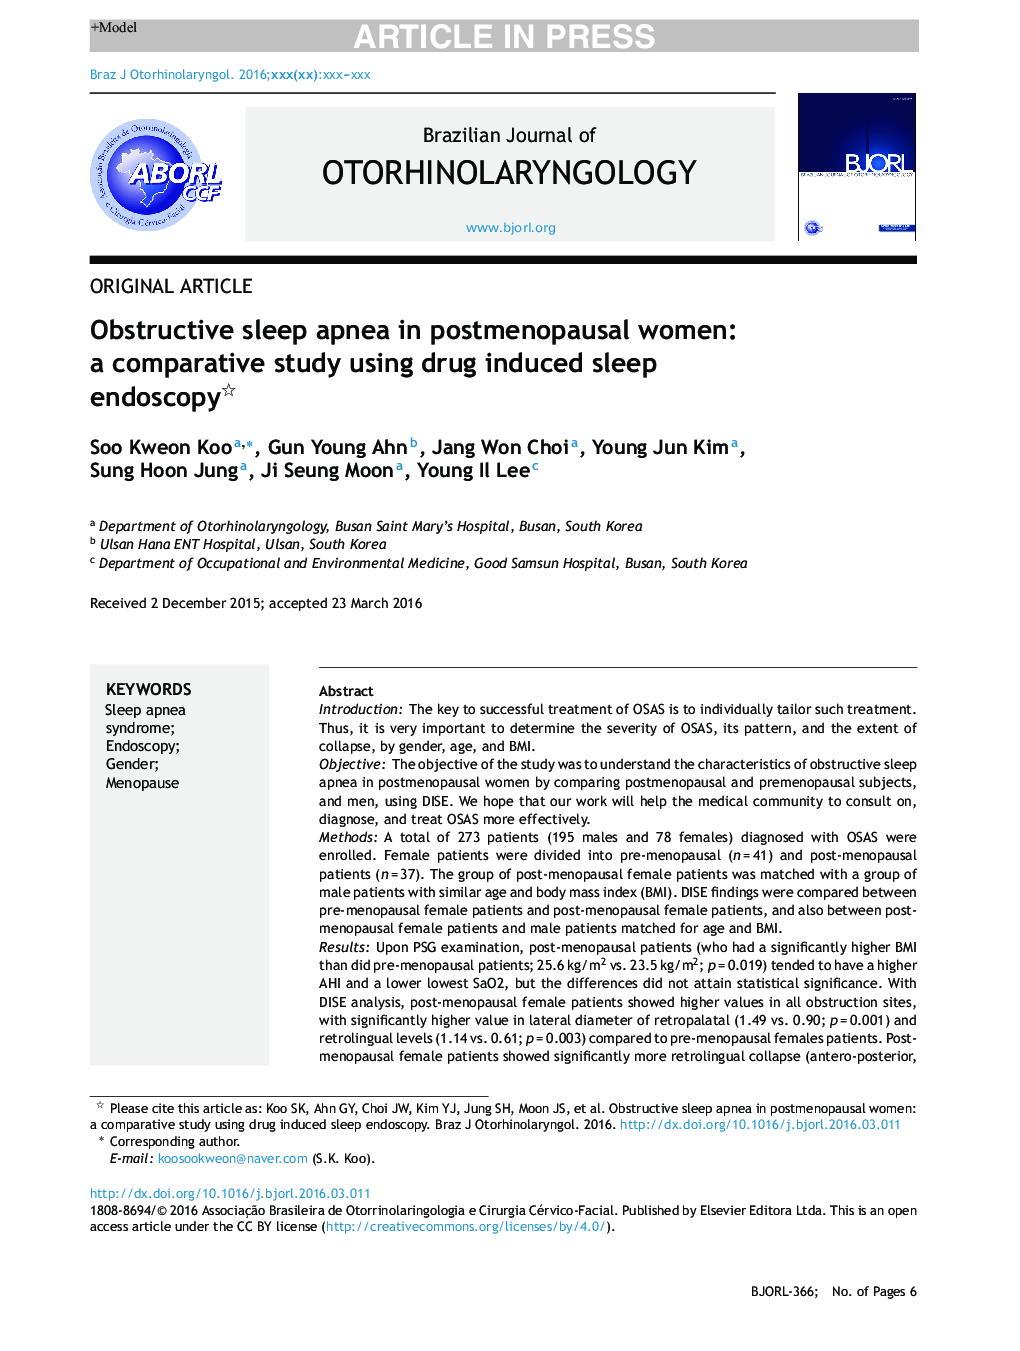 Obstructive sleep apnea in postmenopausal women: a comparative study using drug induced sleep endoscopy